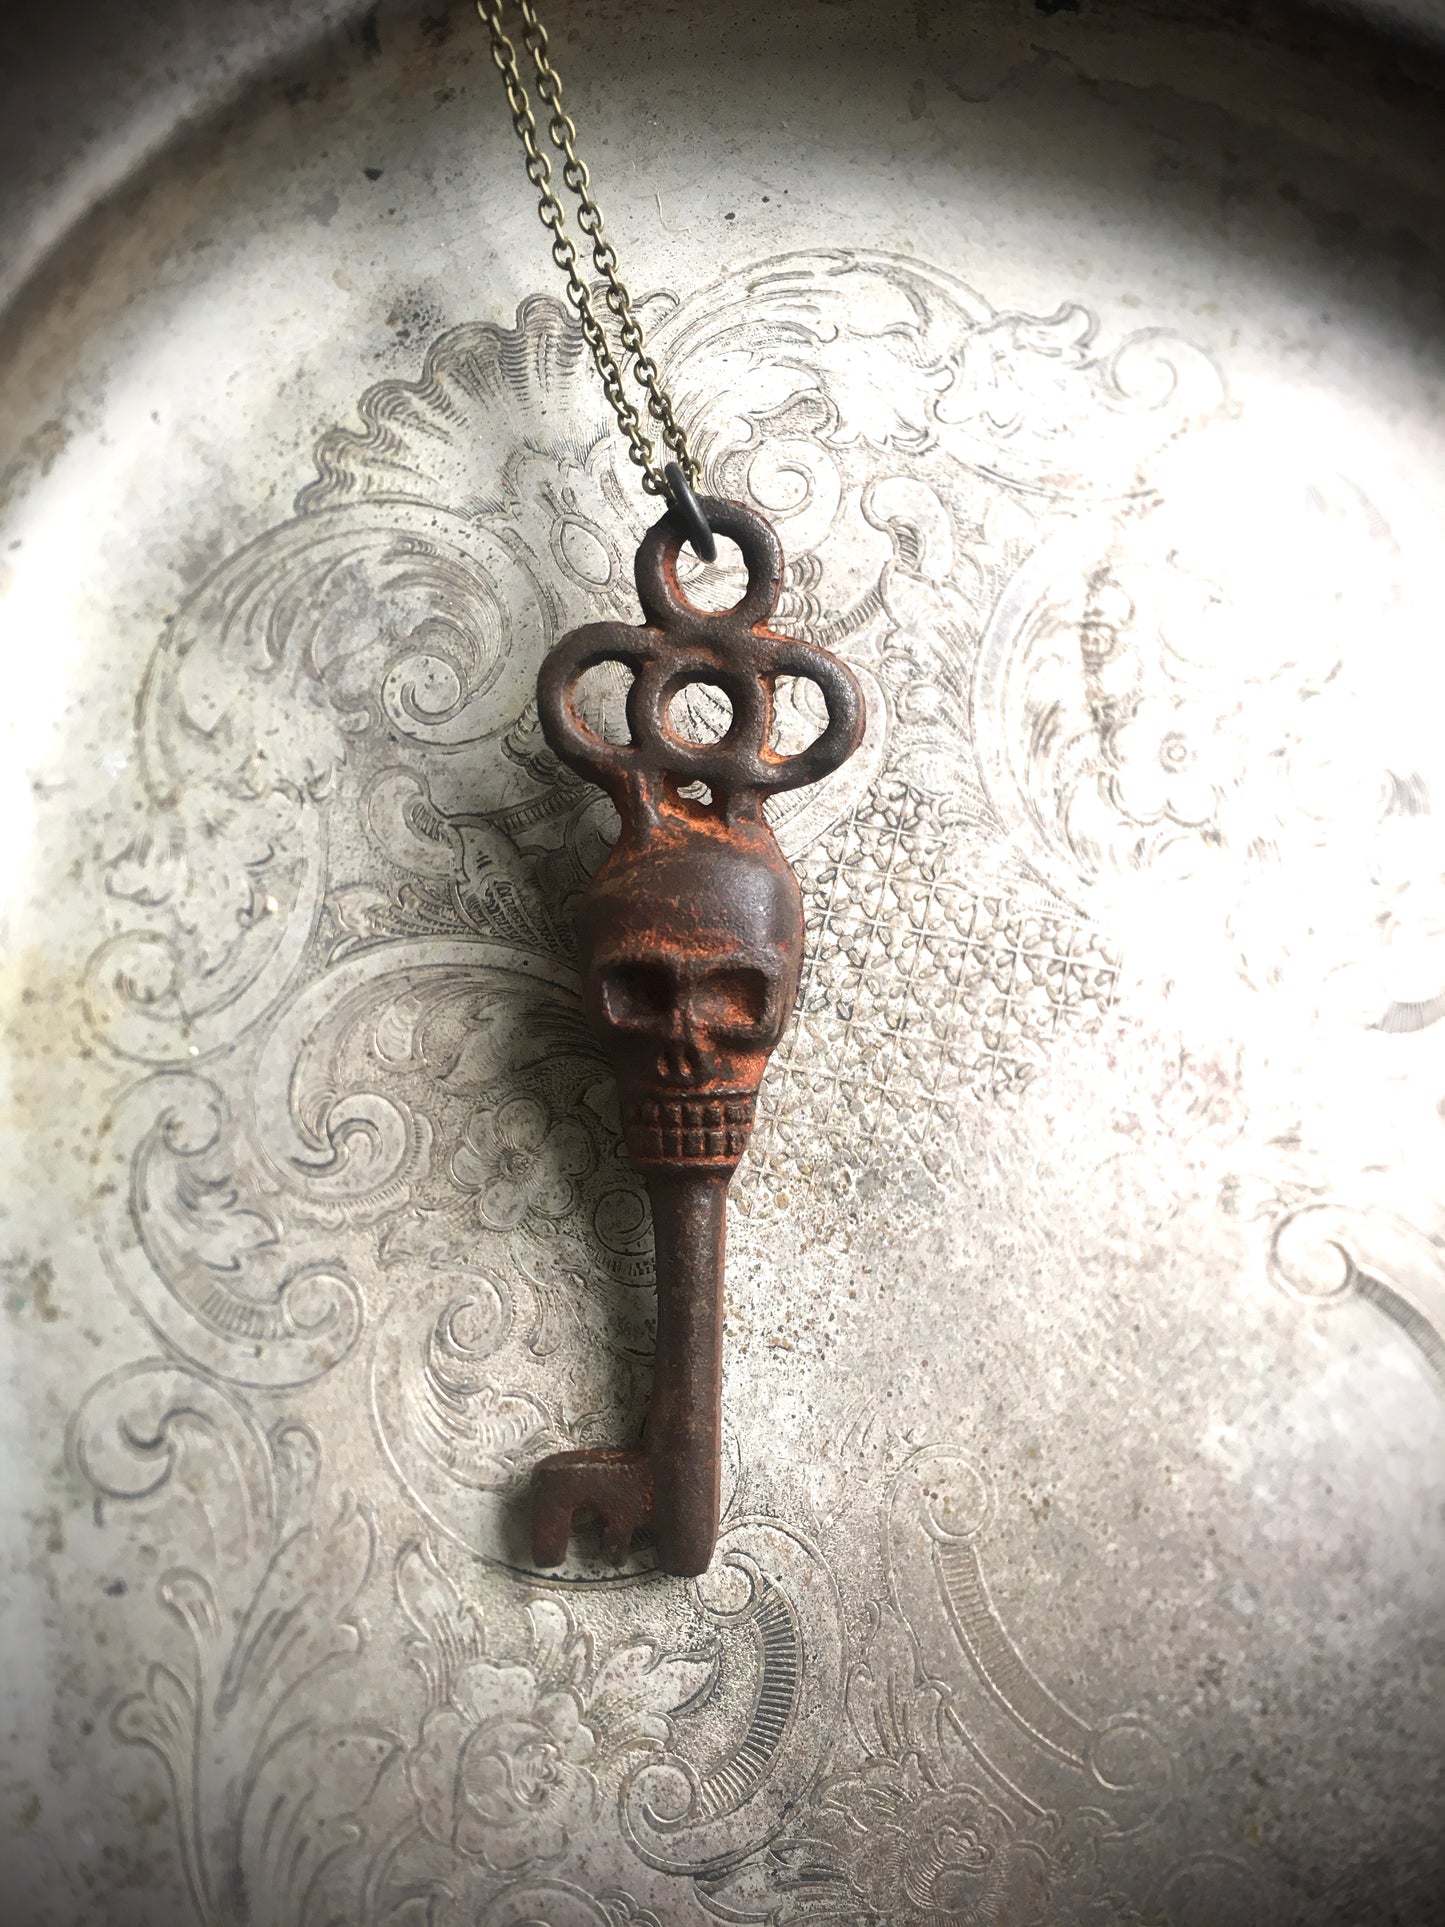 Skeleton Key Necklace